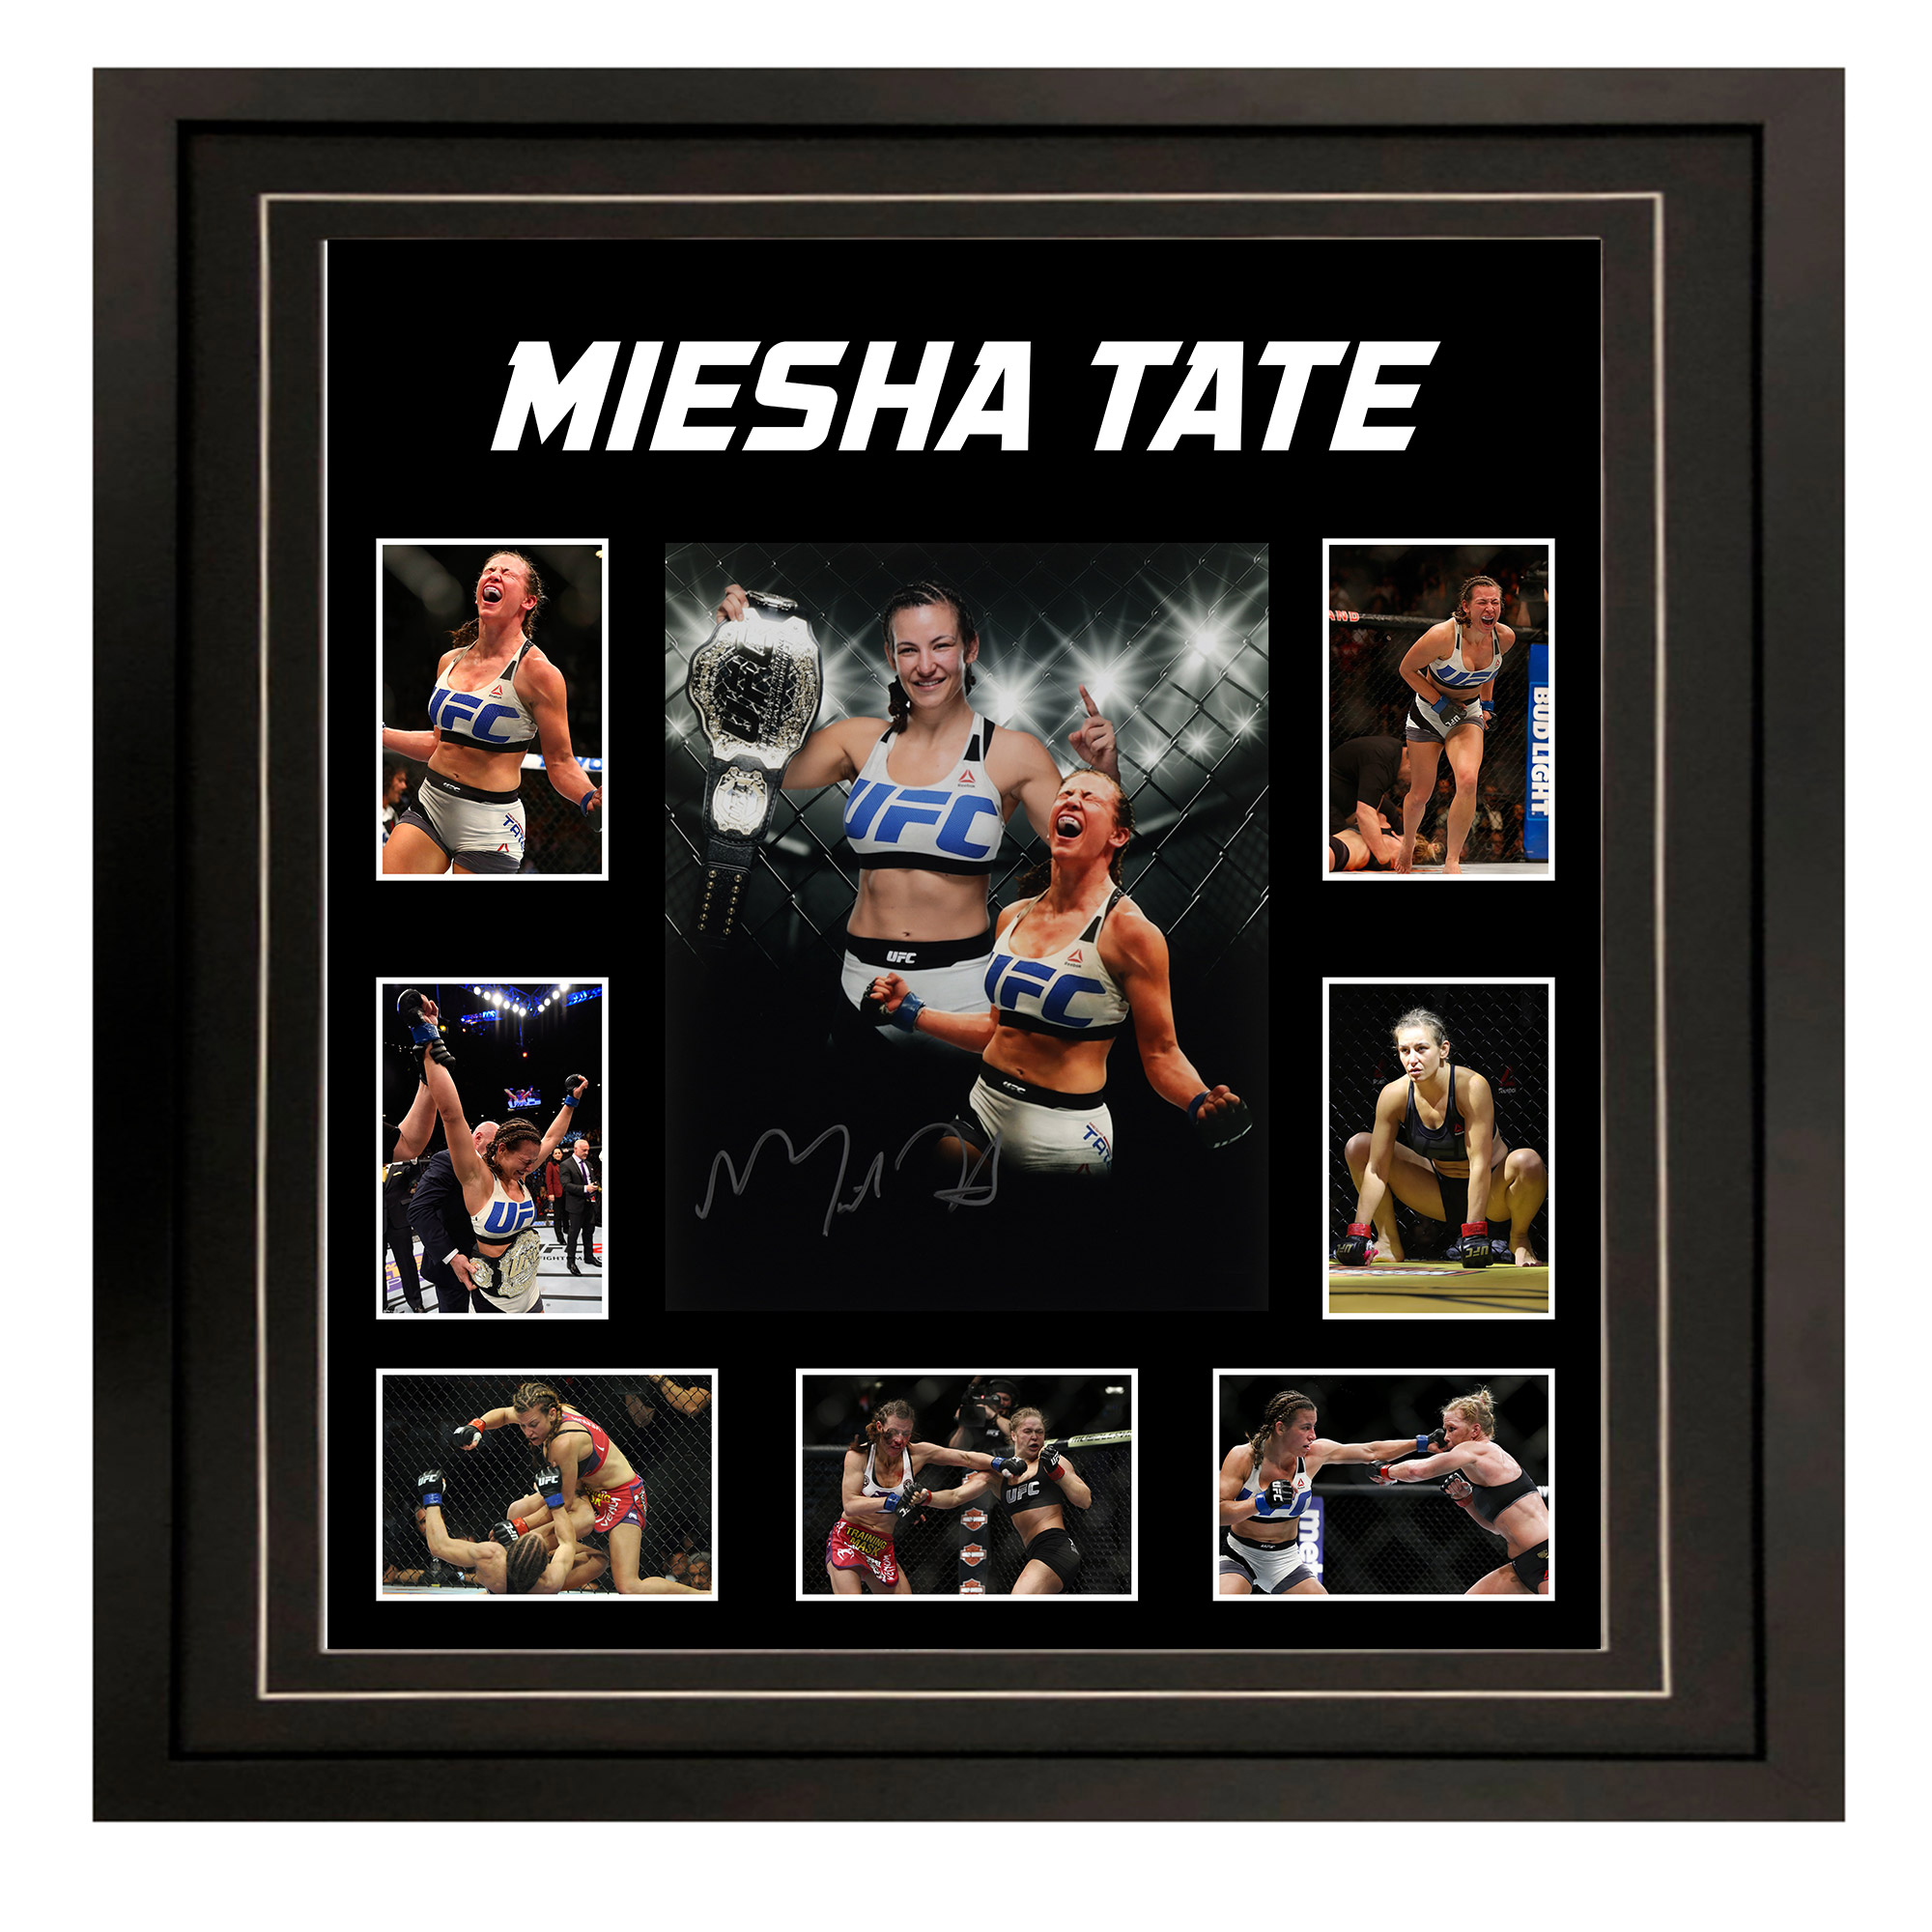 UFC – Miesha Tate Signed & Framed 11×14 Photograph